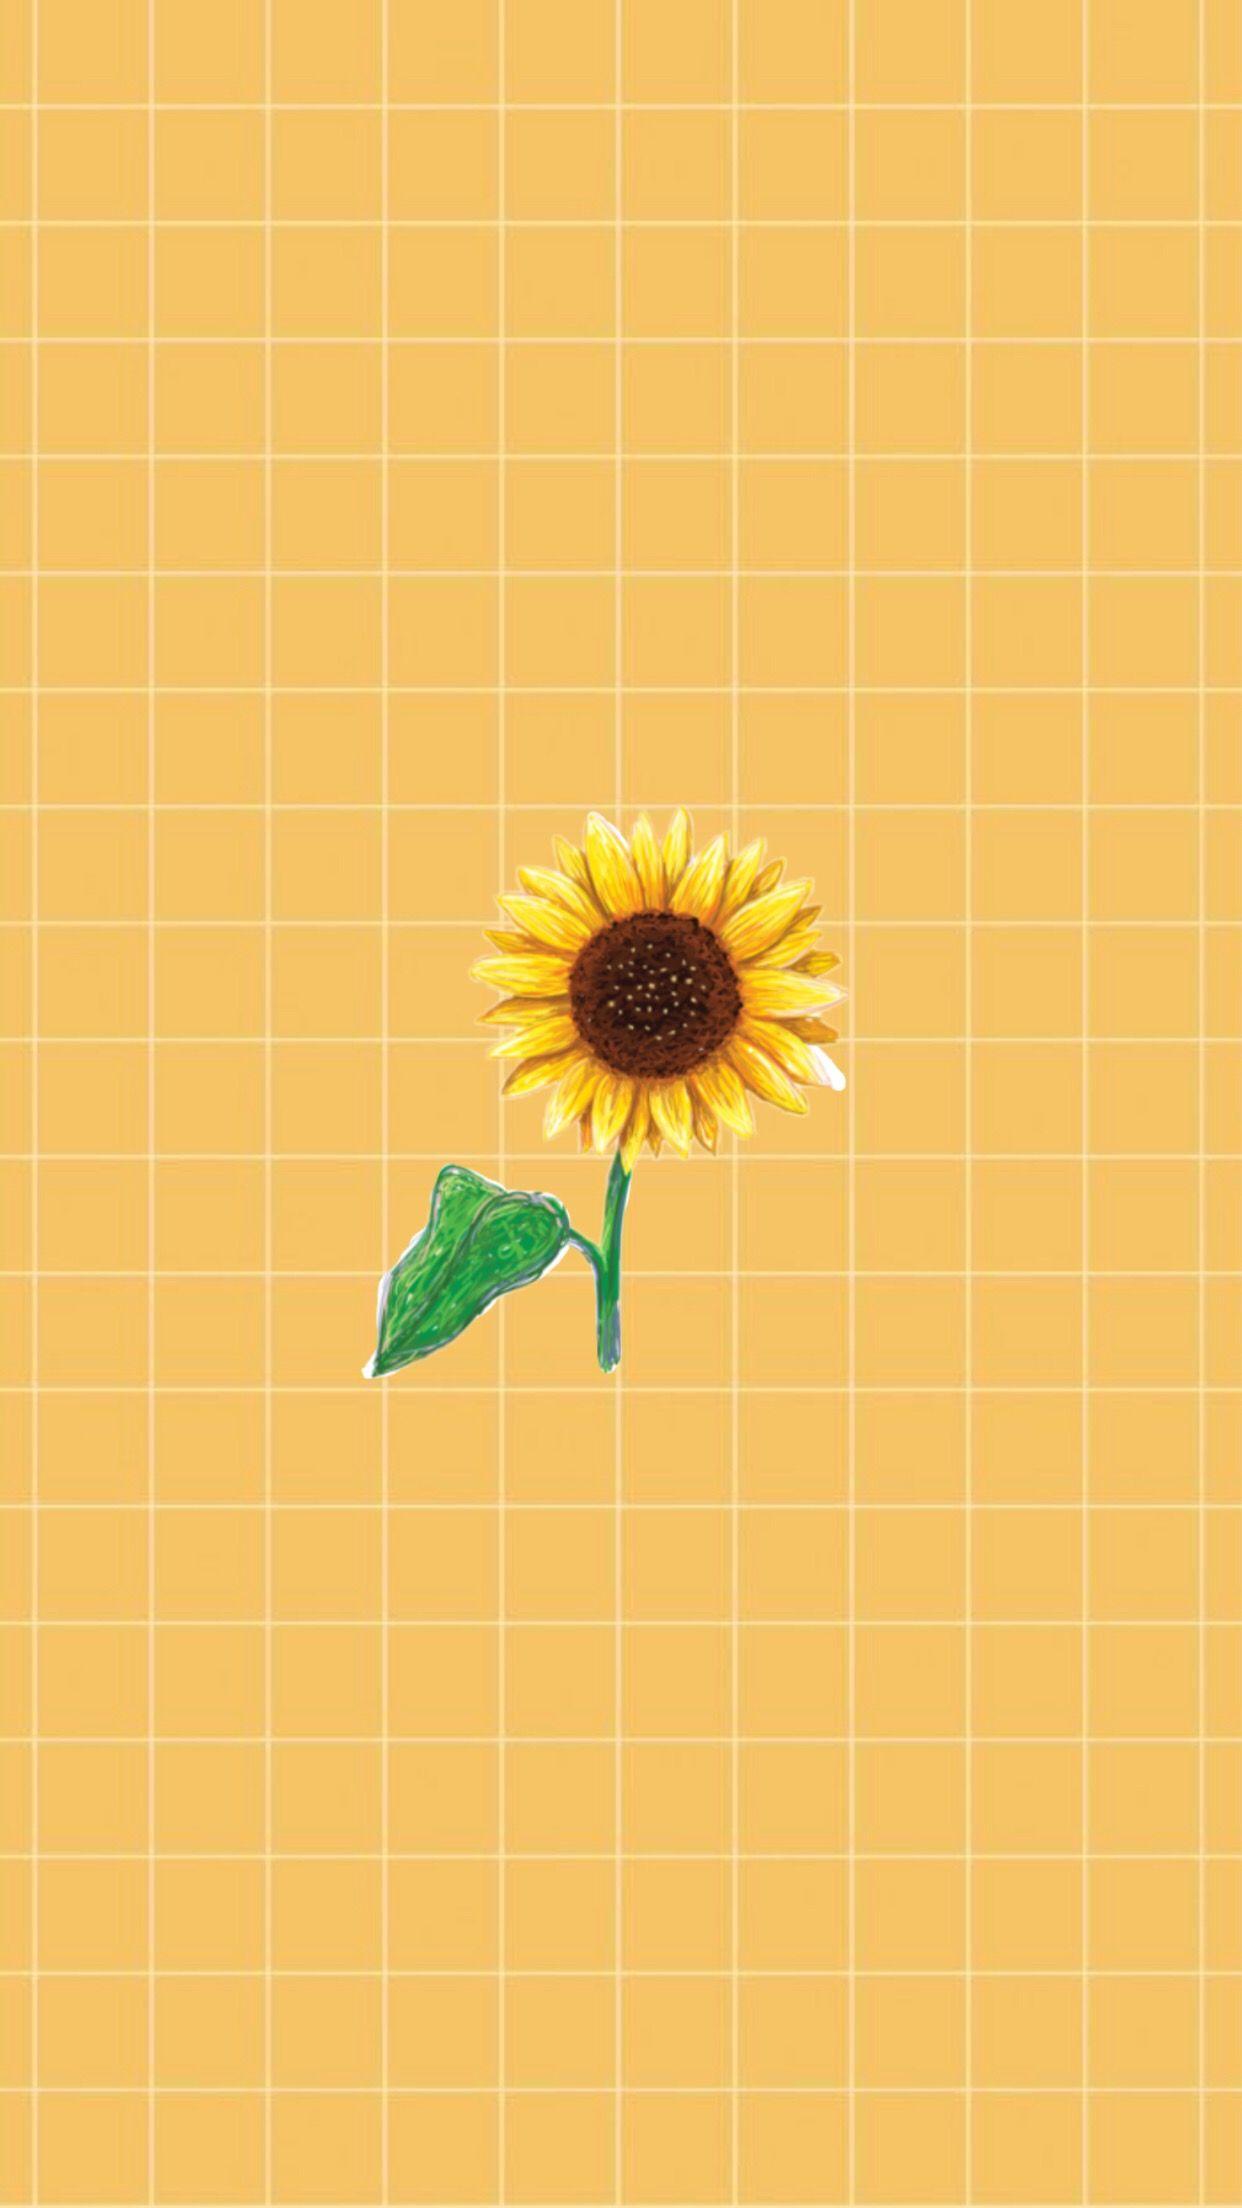 Tumblr wallpaper Yellow Sunflower. Sunflower wallpaper